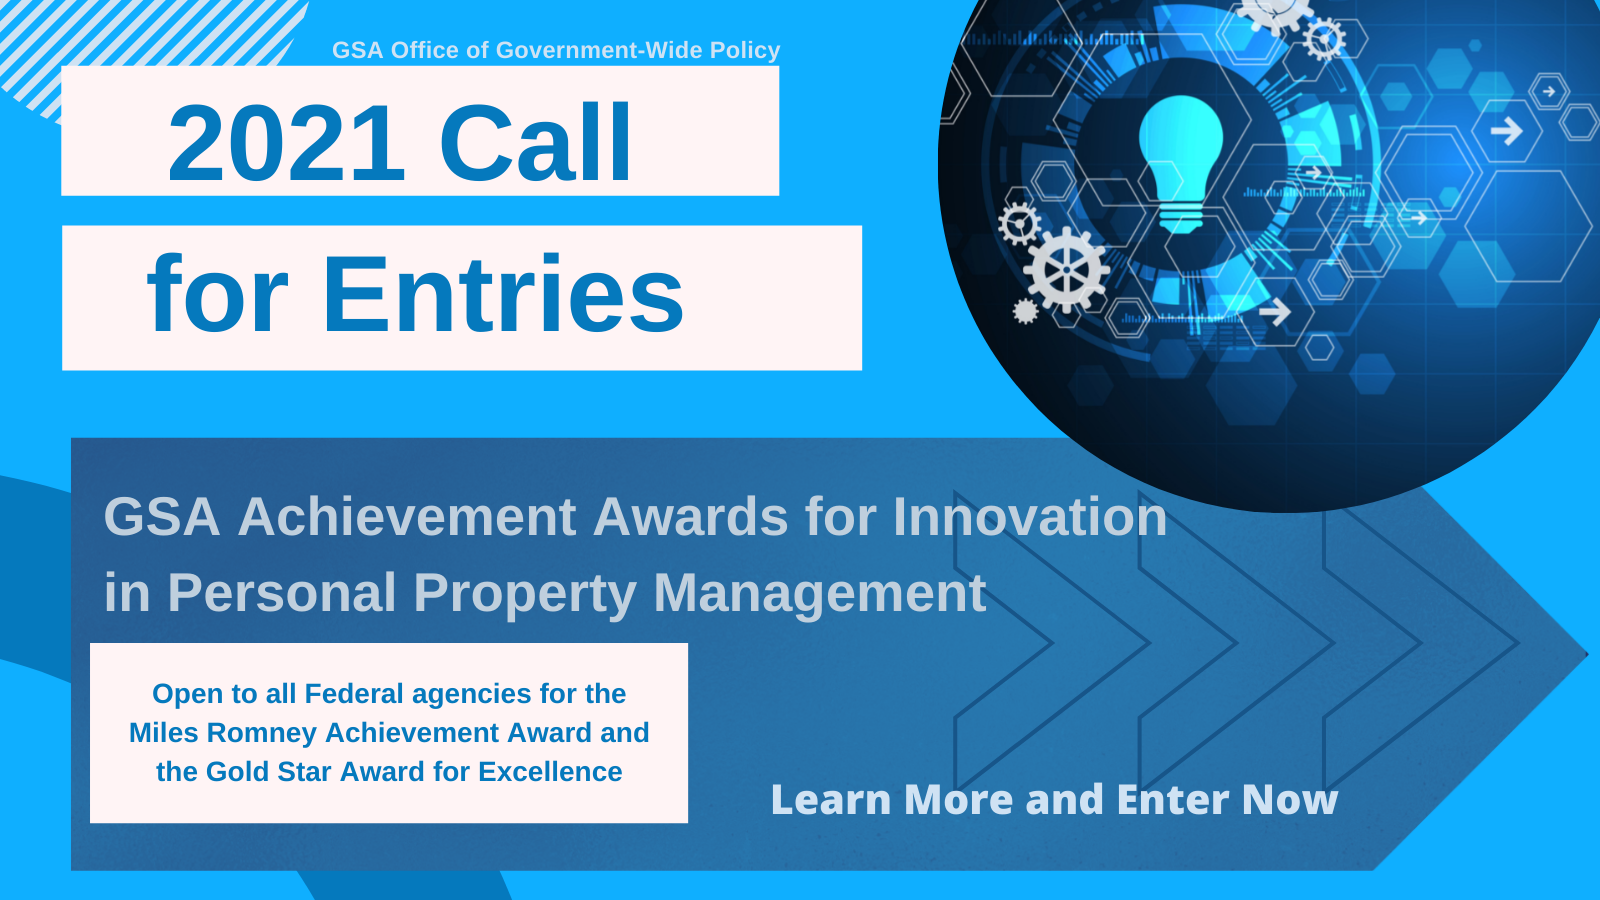 GSA Blog: Personal Property Achievement Awards